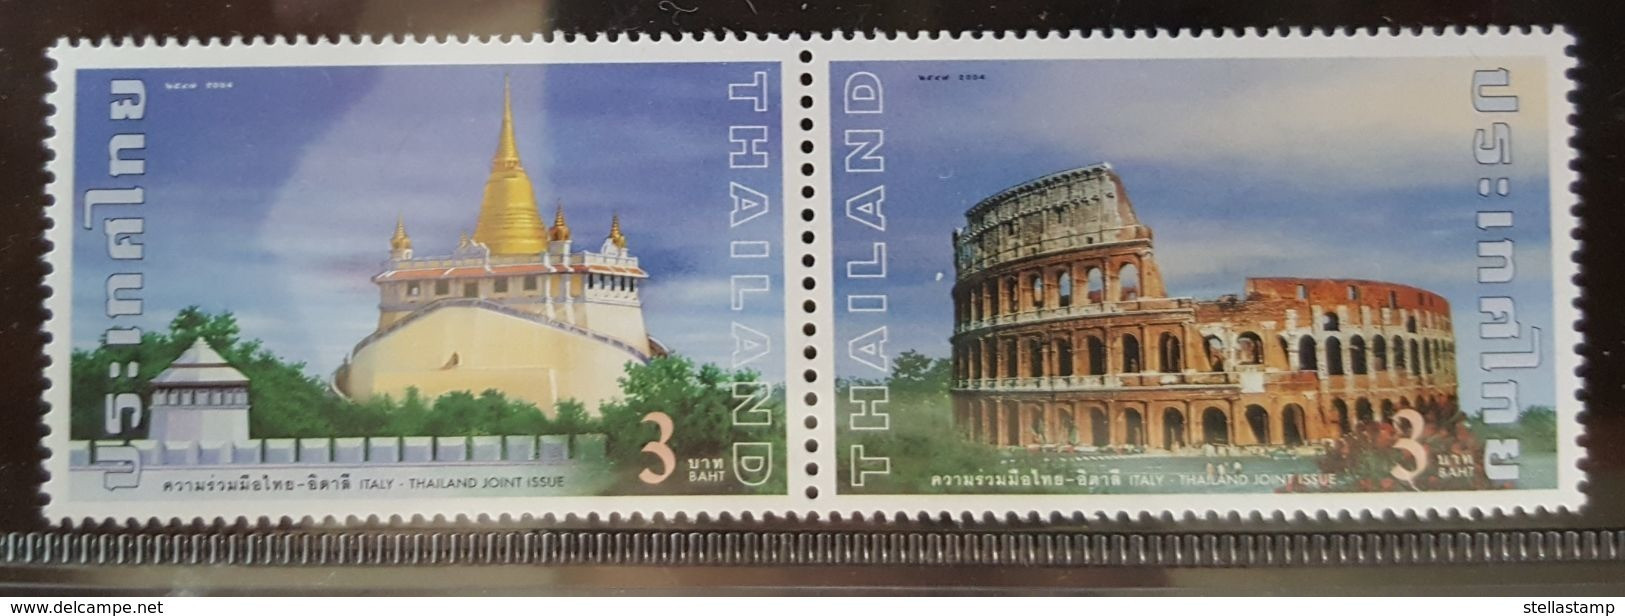 Thailand Stamp 2004 Italy Thailand Joint Issue - Thailand